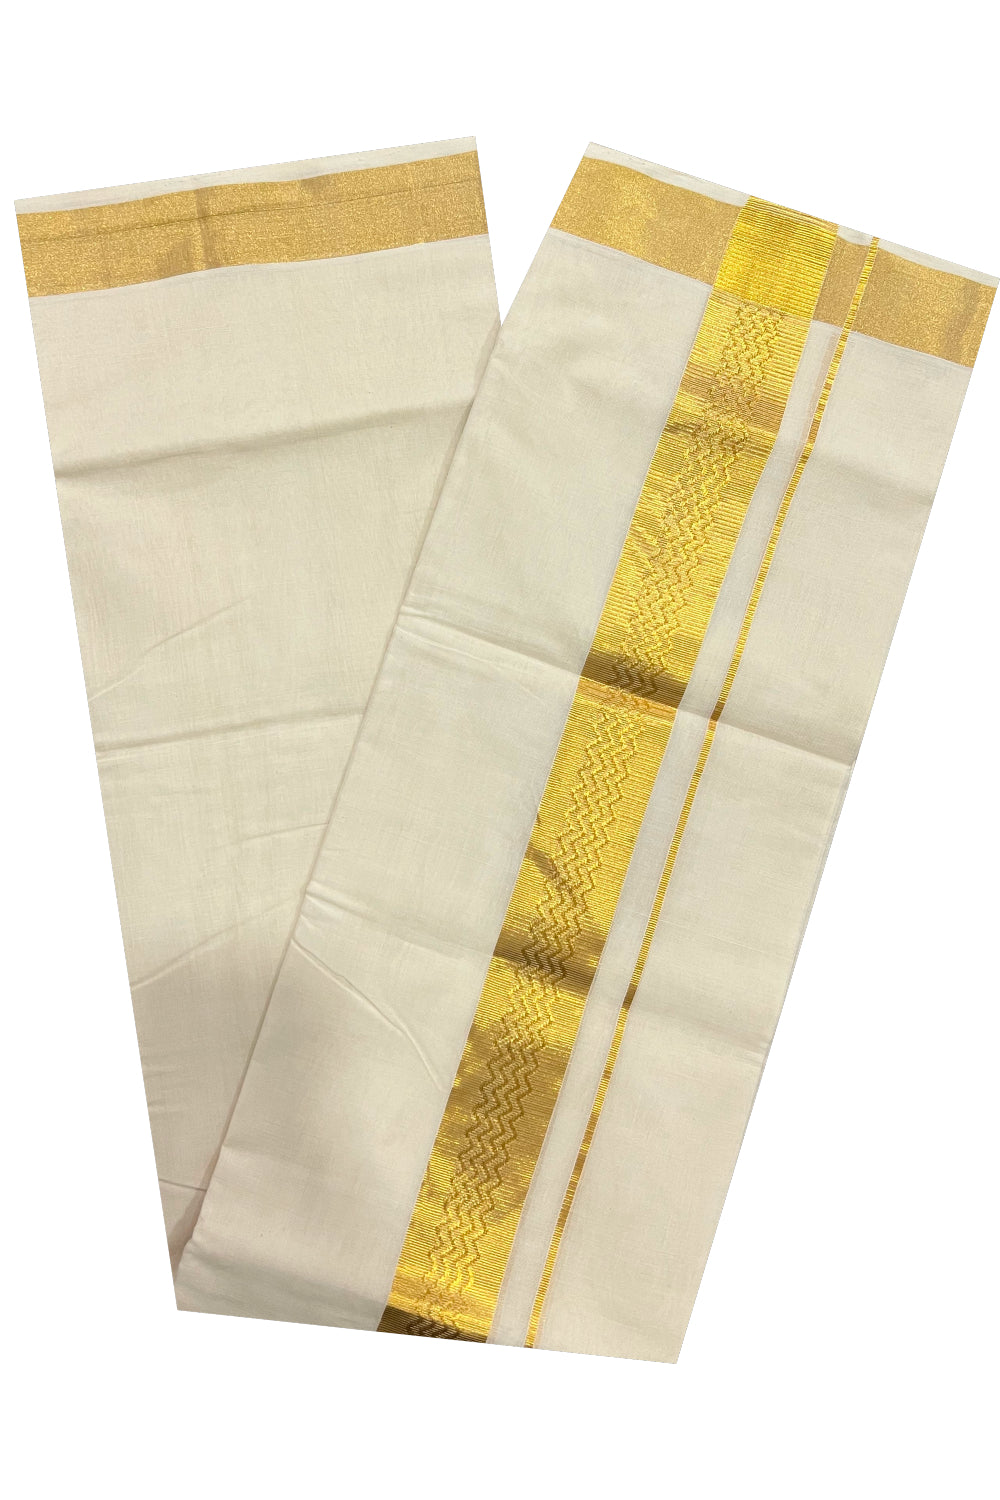 Southloom Premium Handloom Pure Cotton Wedding Mundu with Kasavu Woven Kara (South Indian Dhoti)